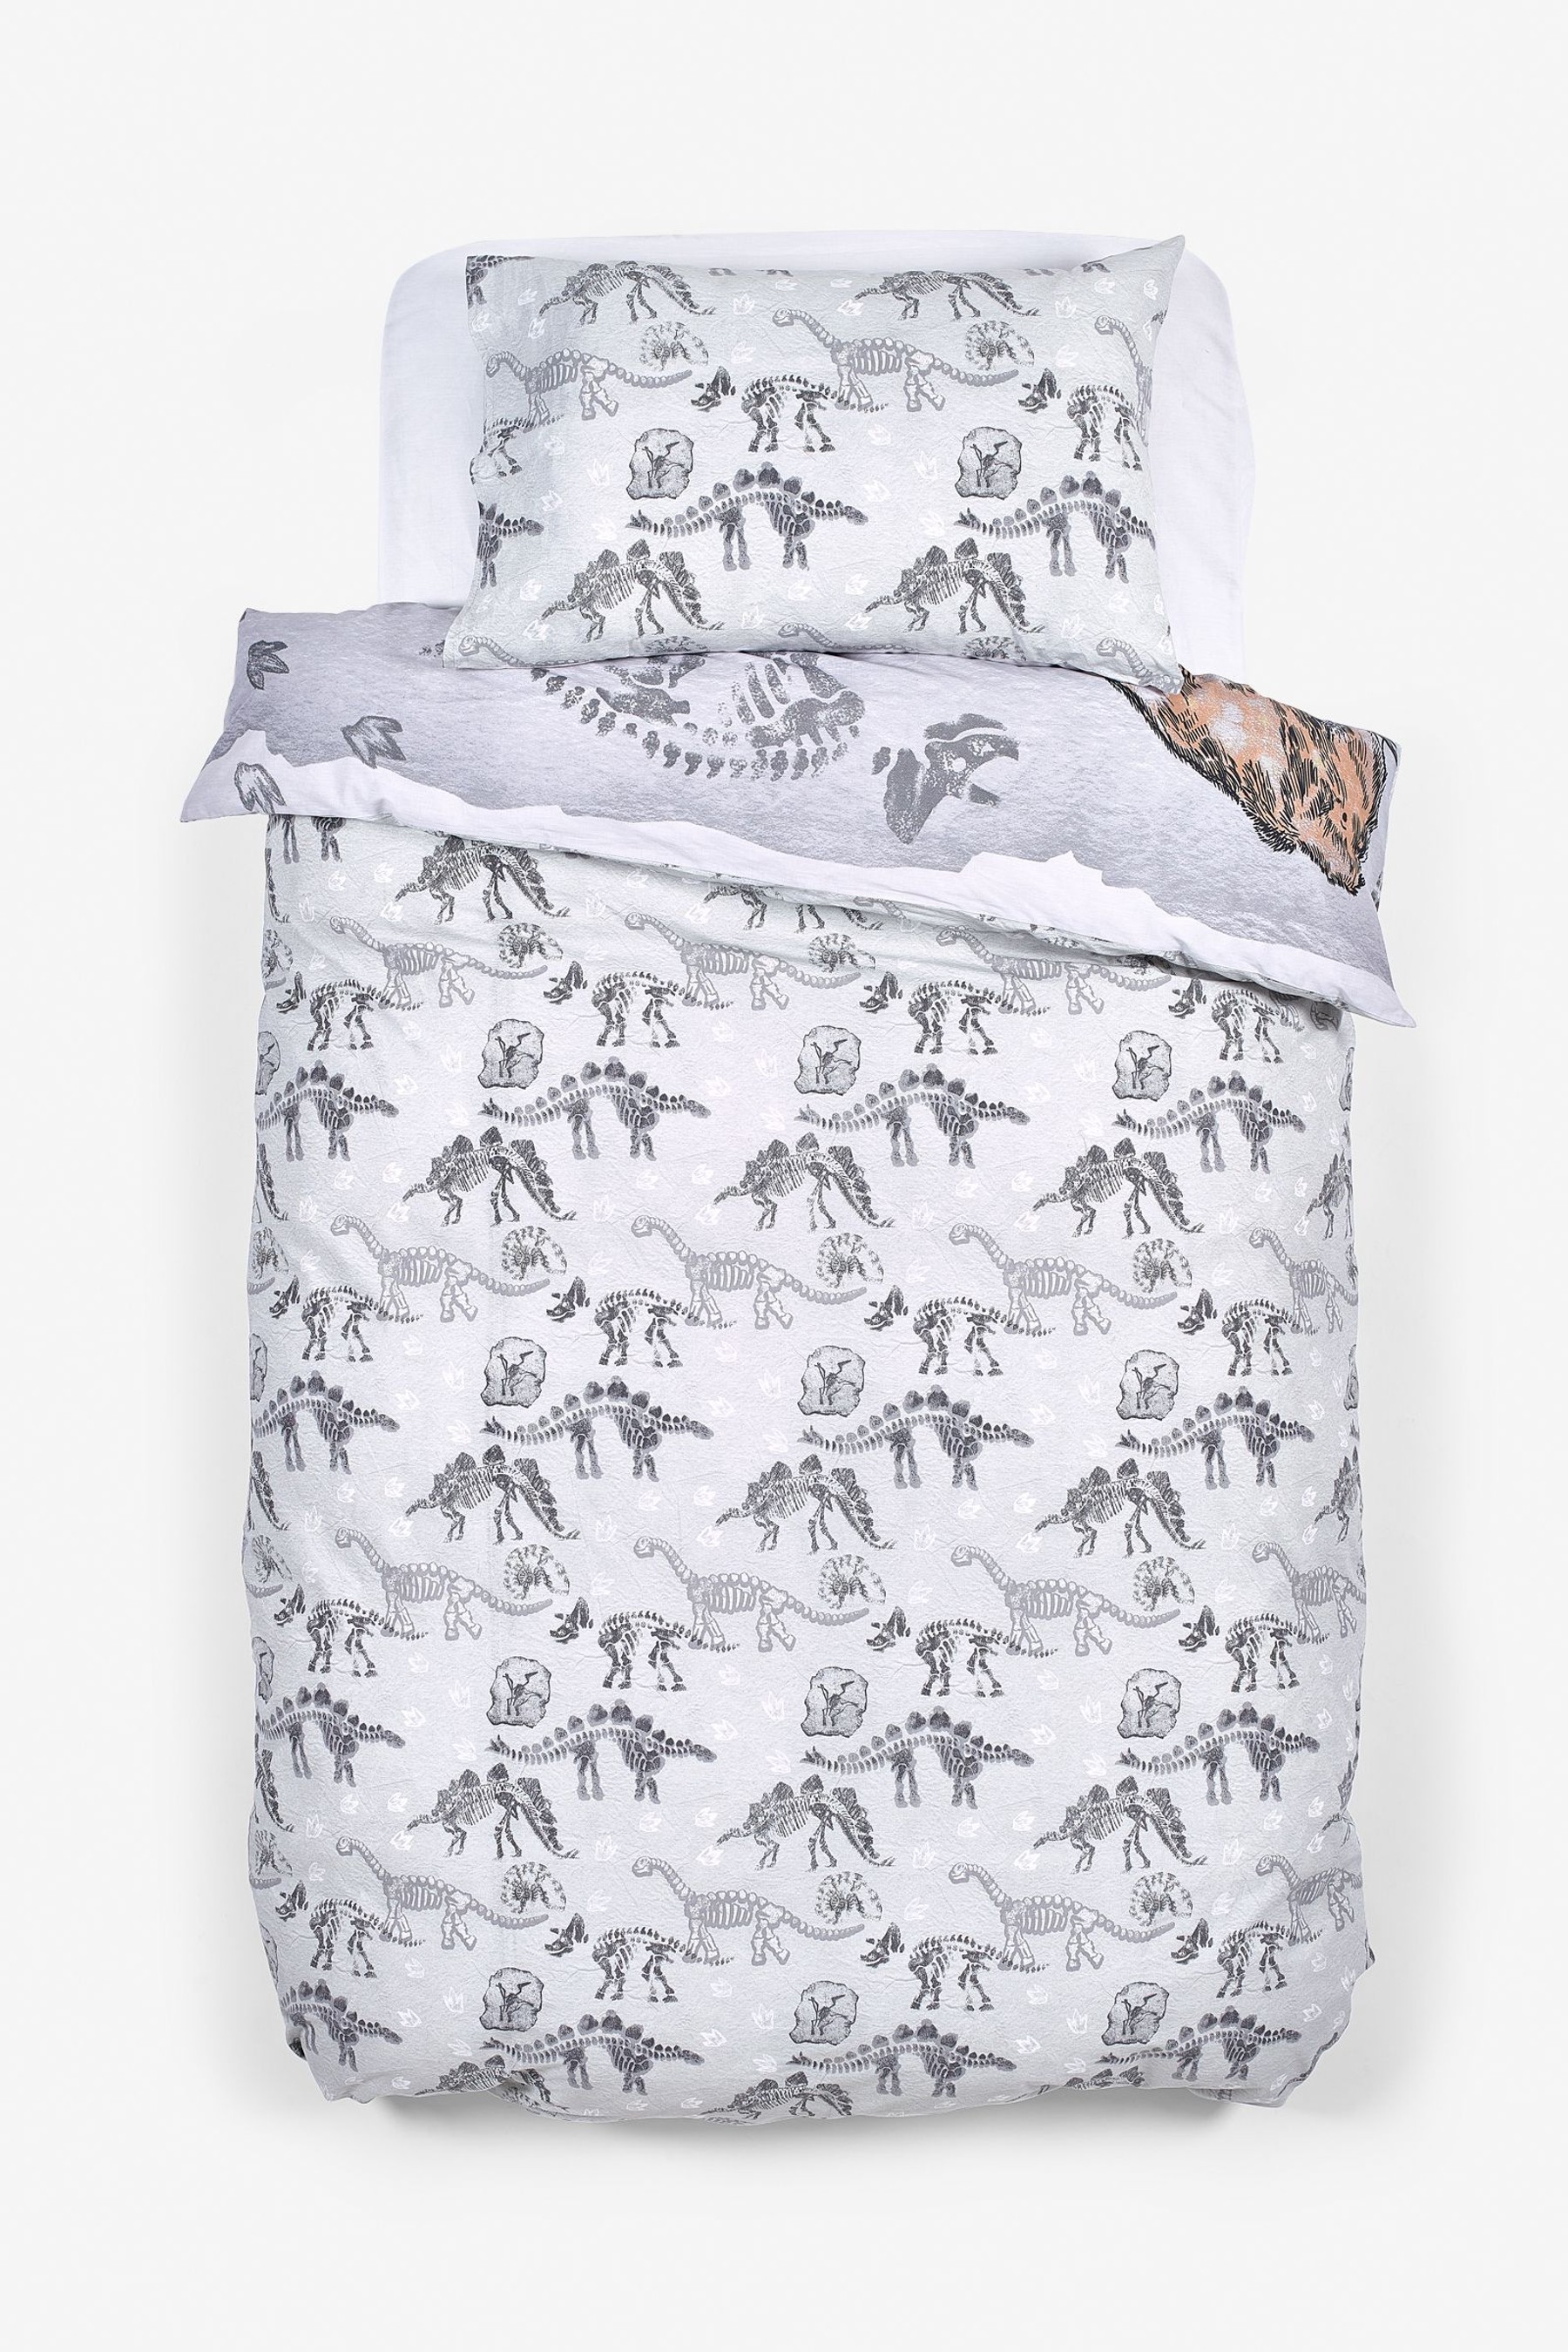 100% Cotton Dino Land Reversible Duvet Cover and Pillowcase Set